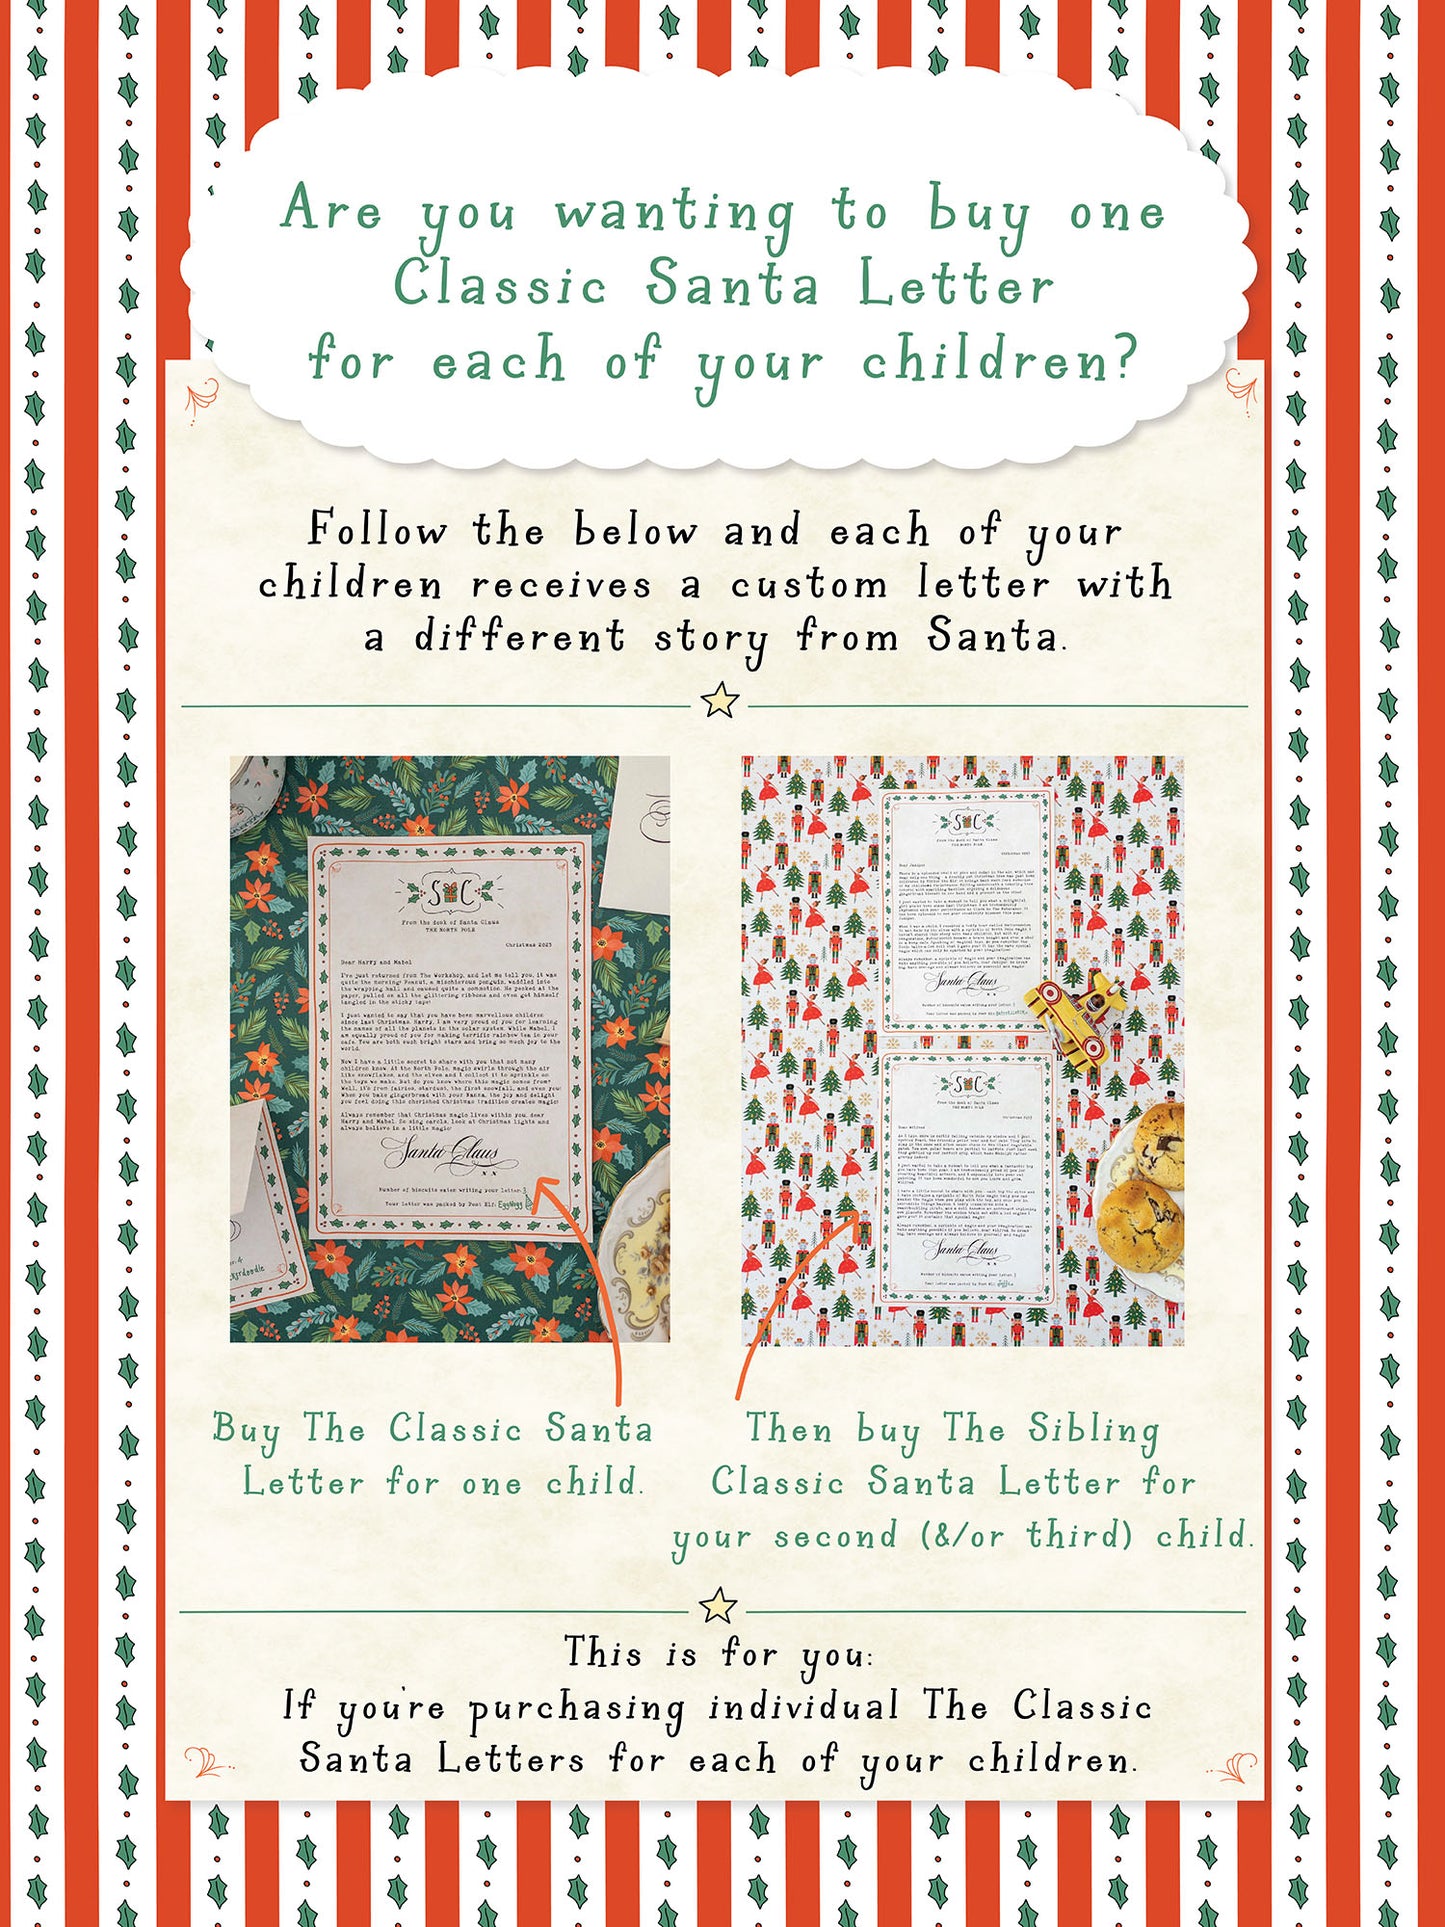 The Classic Santa Claus Letter